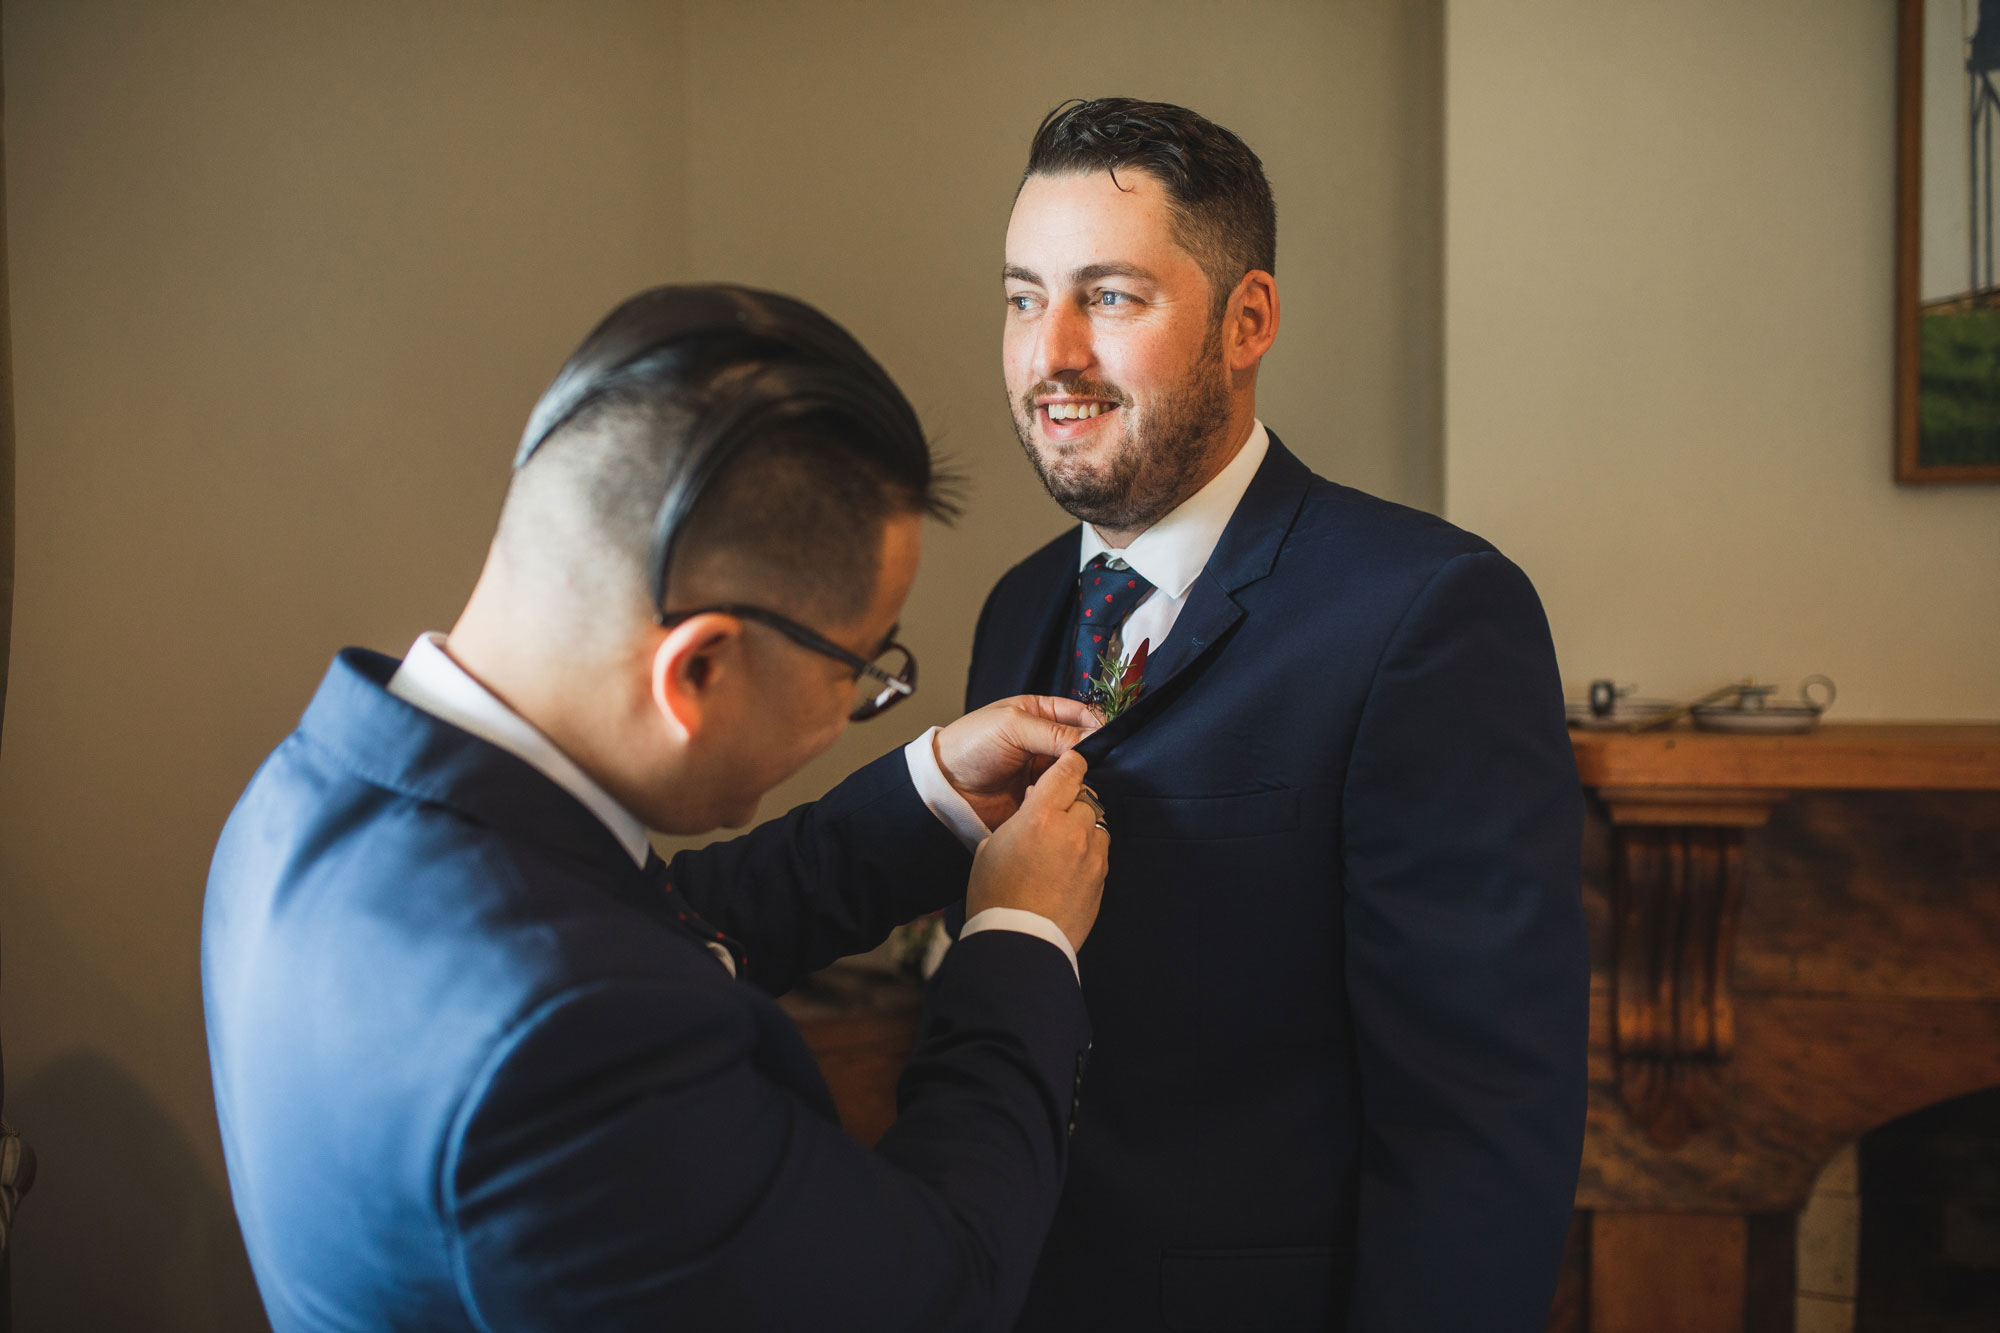 auckland wedding groomsmen buttonhole